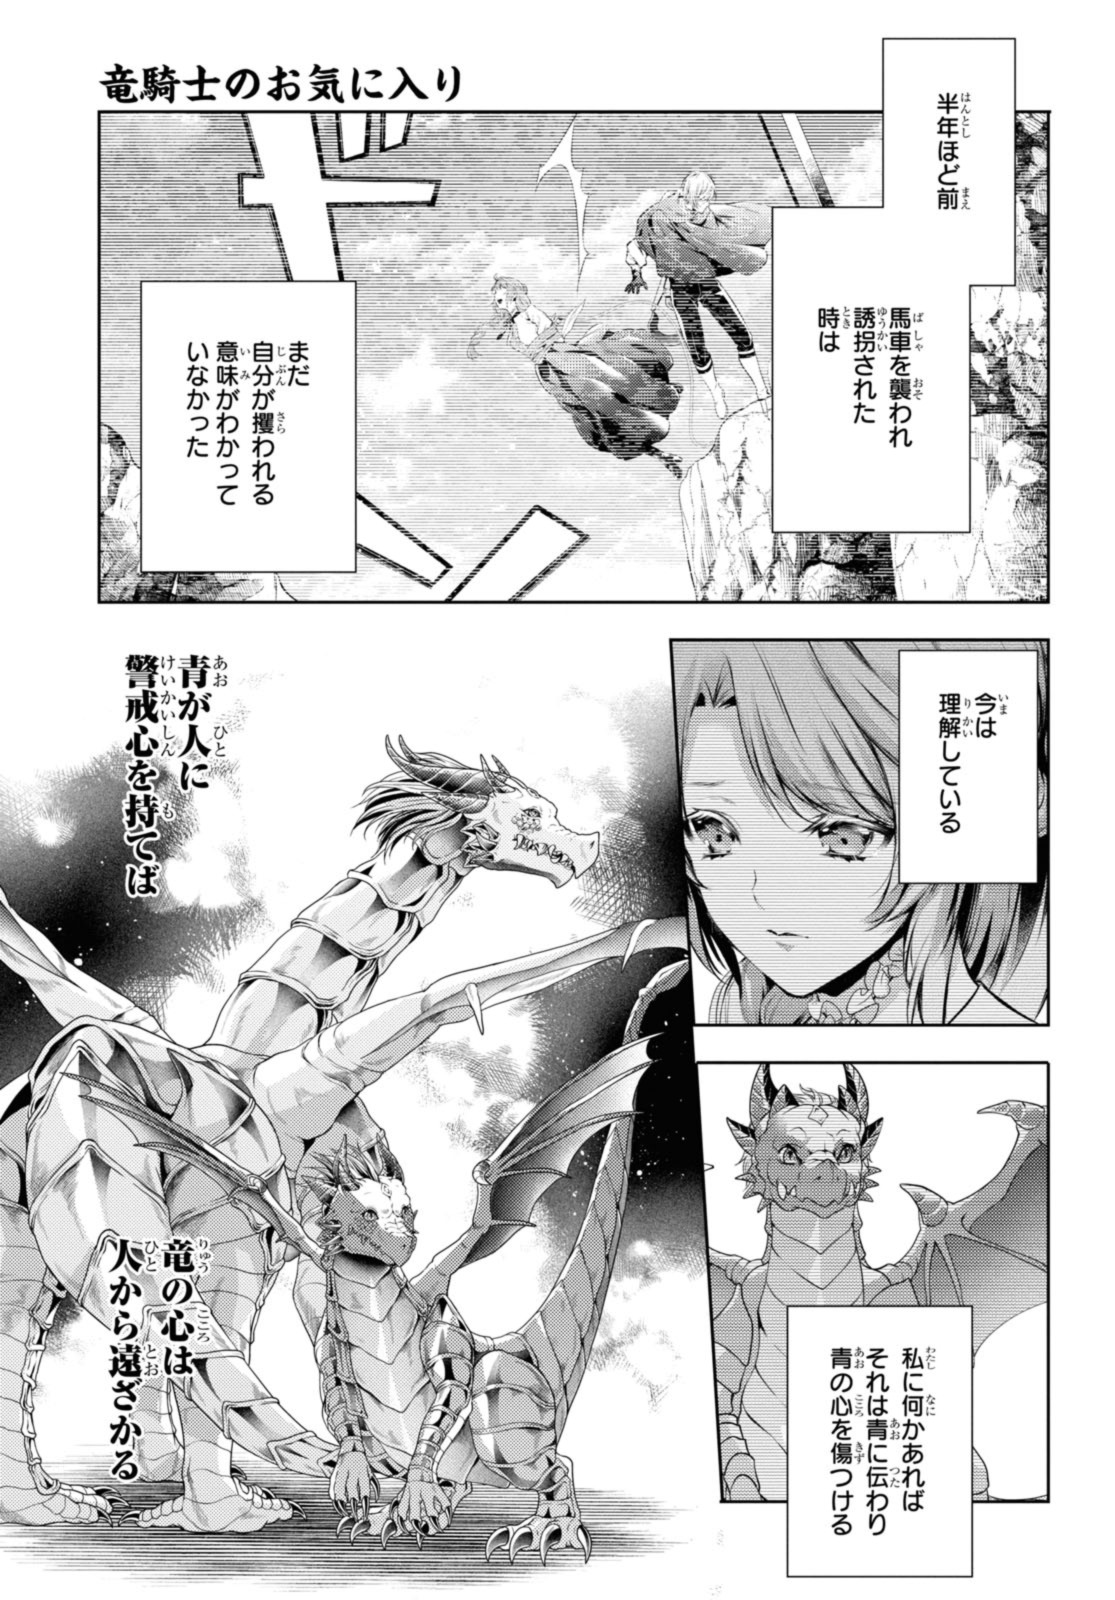 Ryukishi no Okiniiri - Chapter 44.2 - Page 3